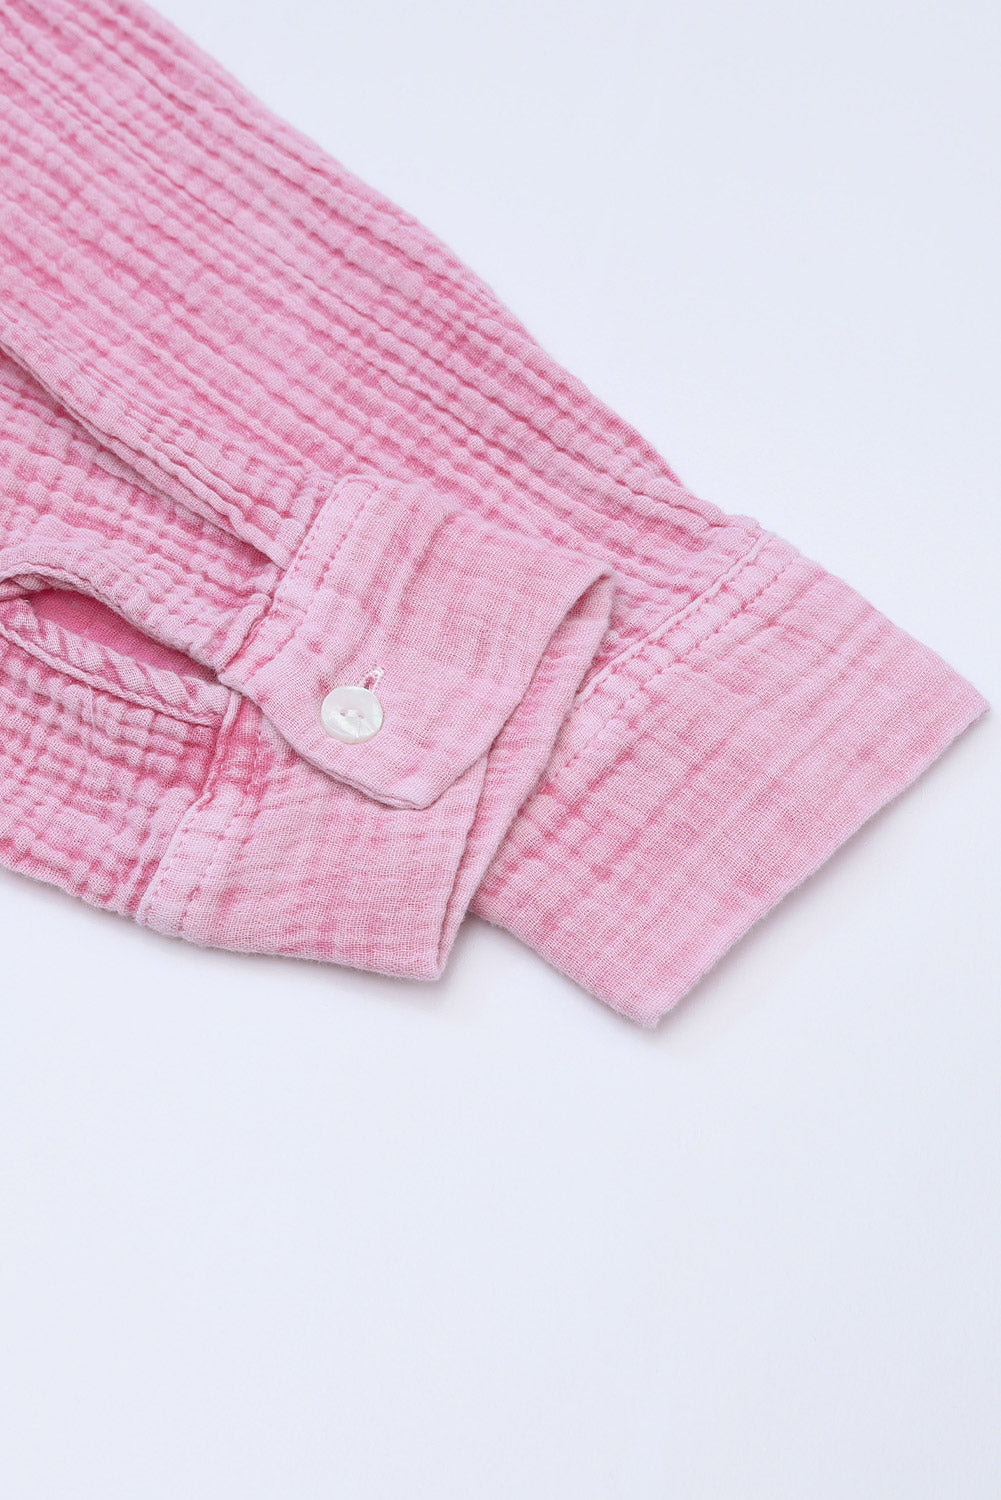 Pink Crinkle Textured Loose Henley Top